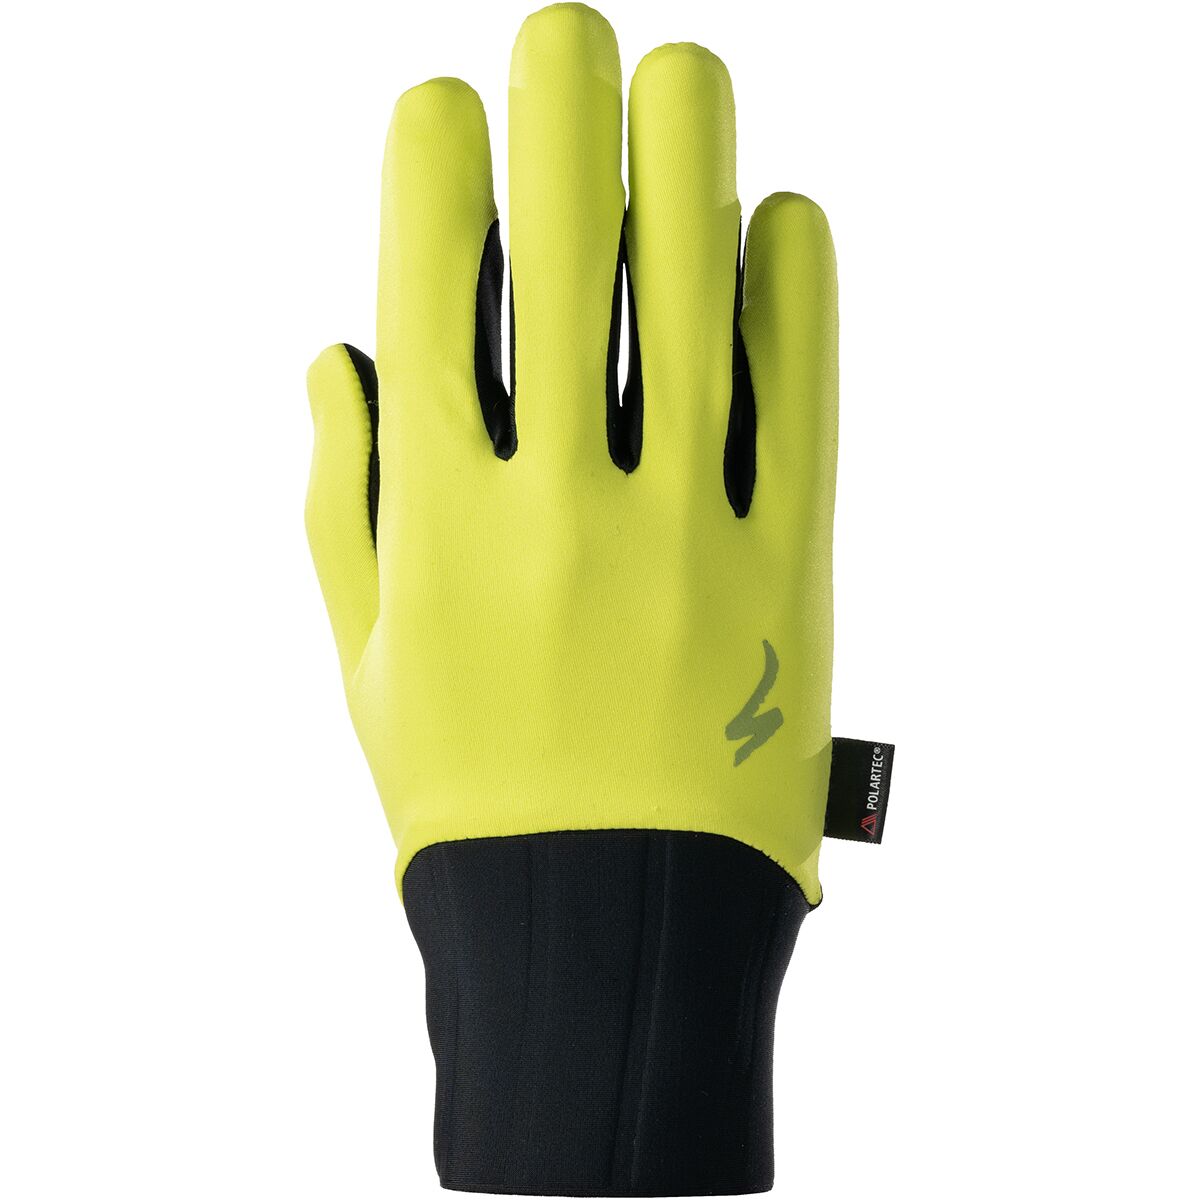 Specialized Prime-Series Thermal Glove - Men's